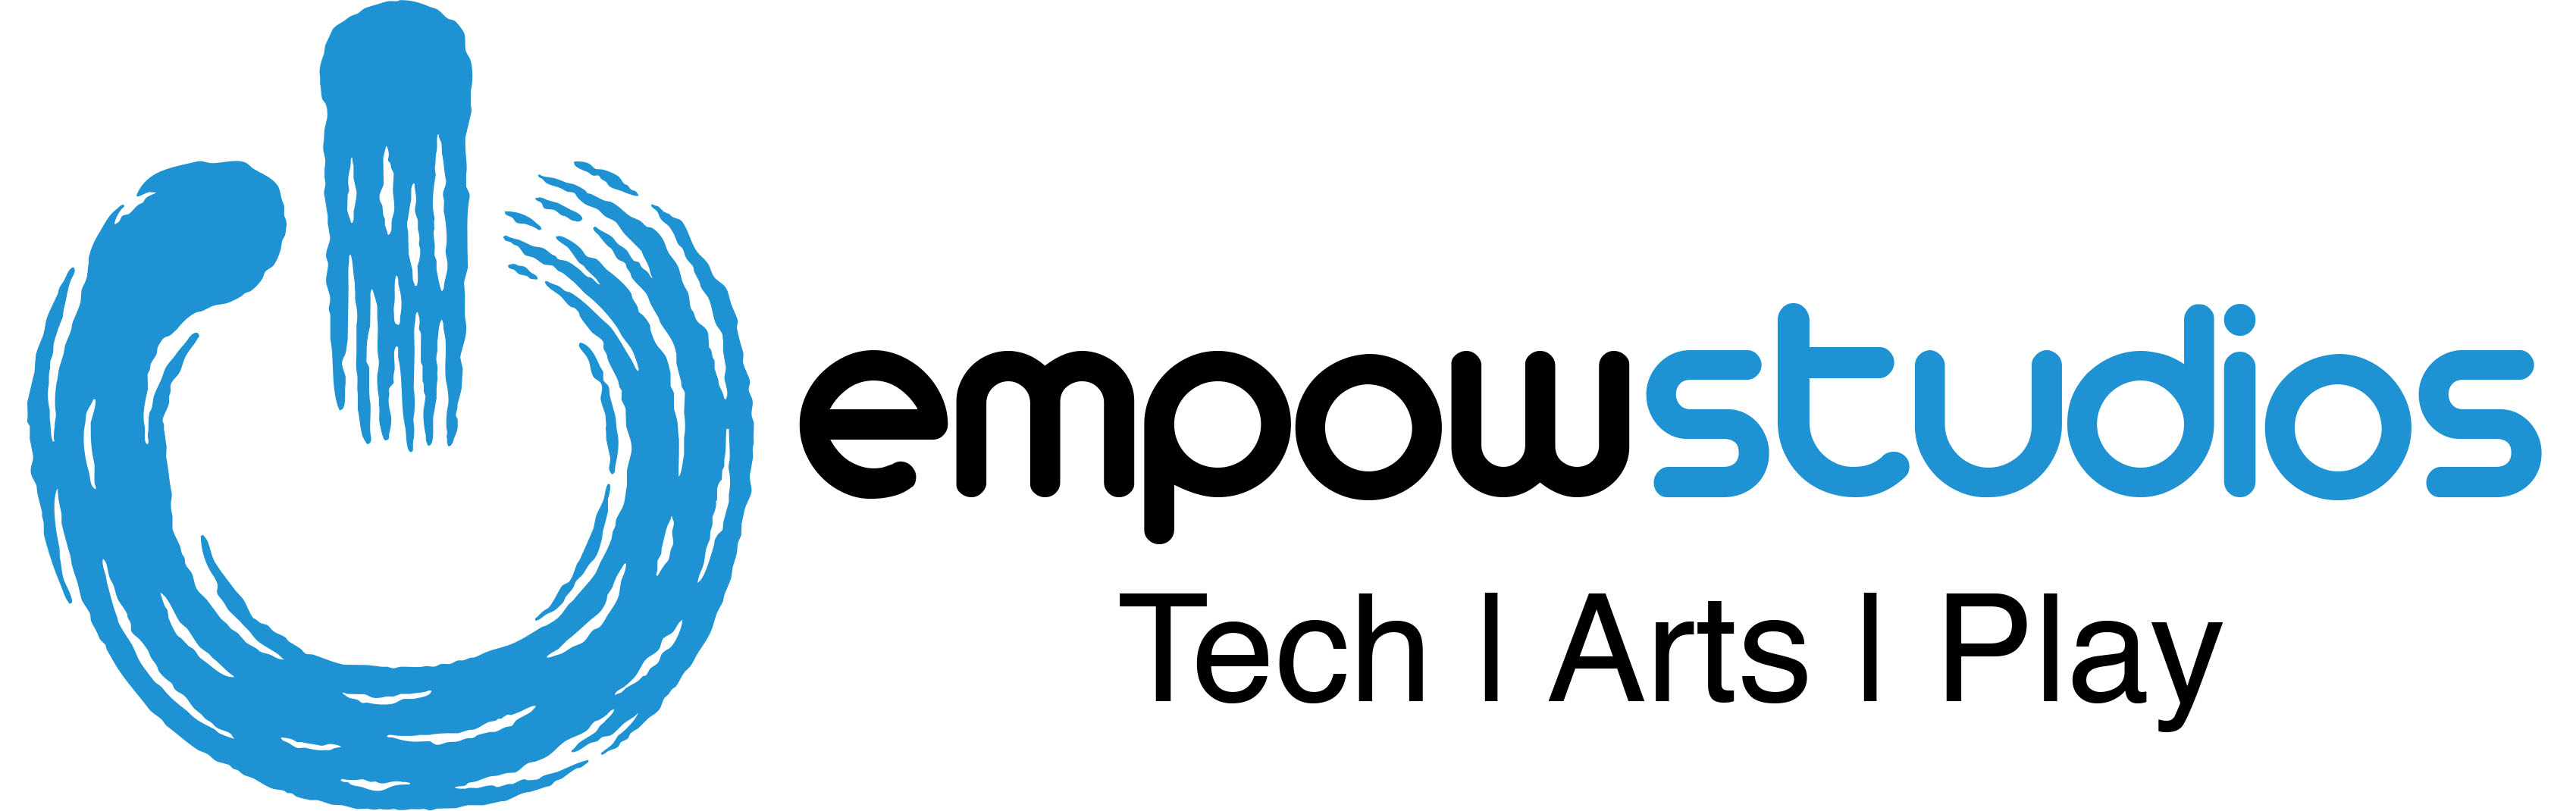 Landscape Empow Studios Logo